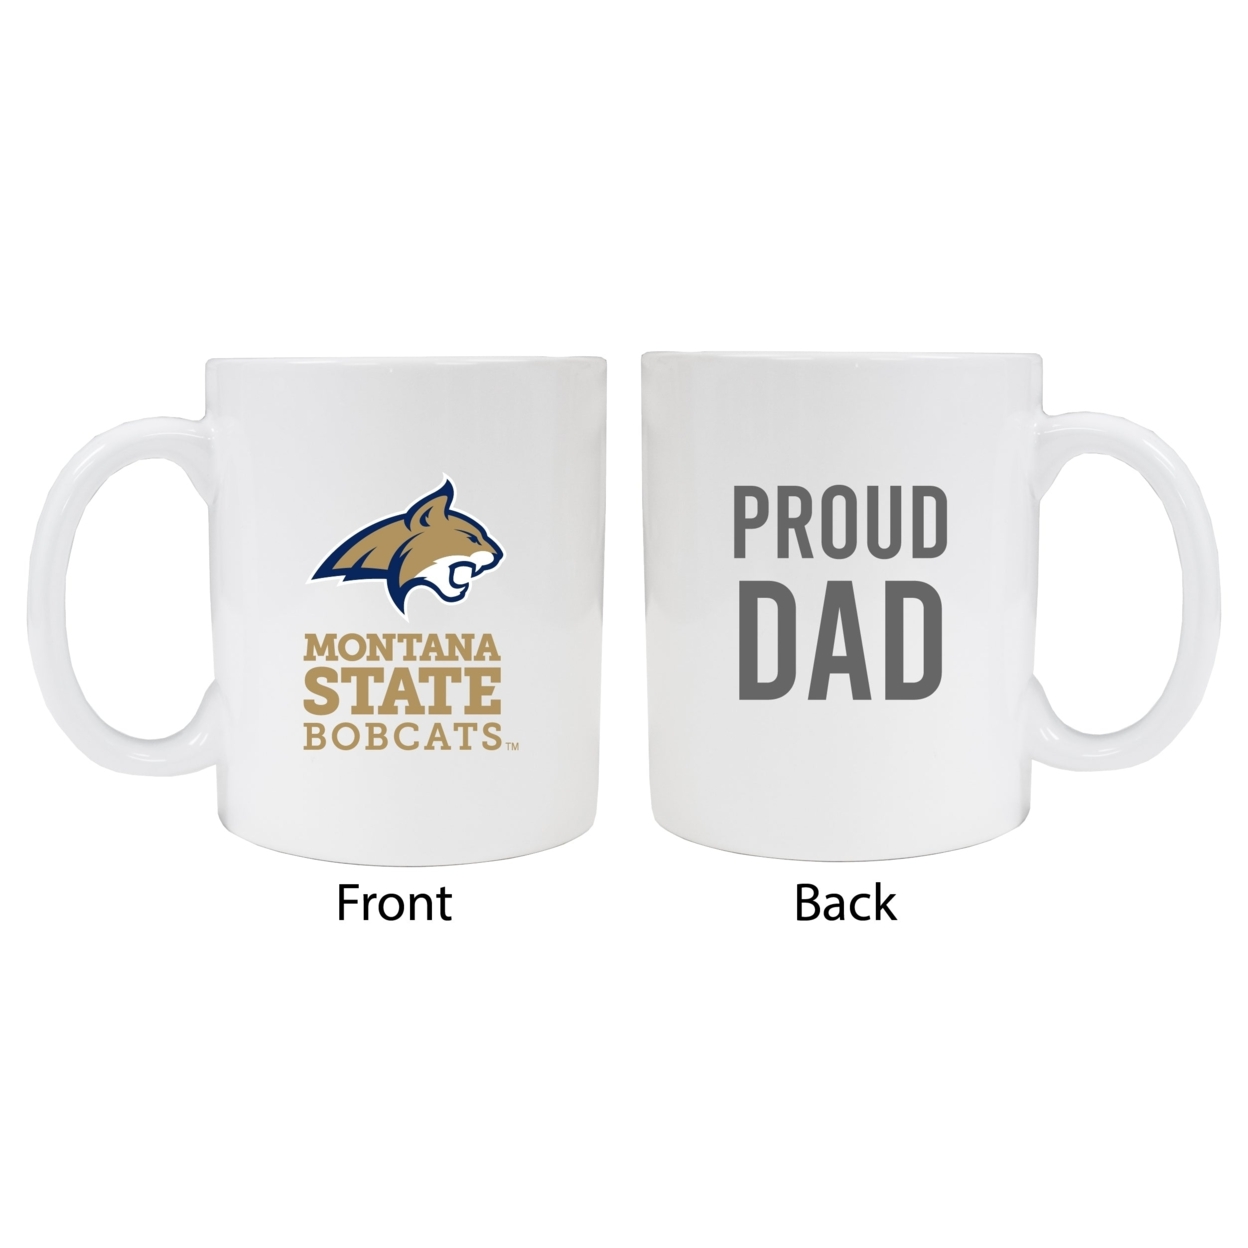 Montana State Bobcats Proud Dad Ceramic Coffee Mug - White